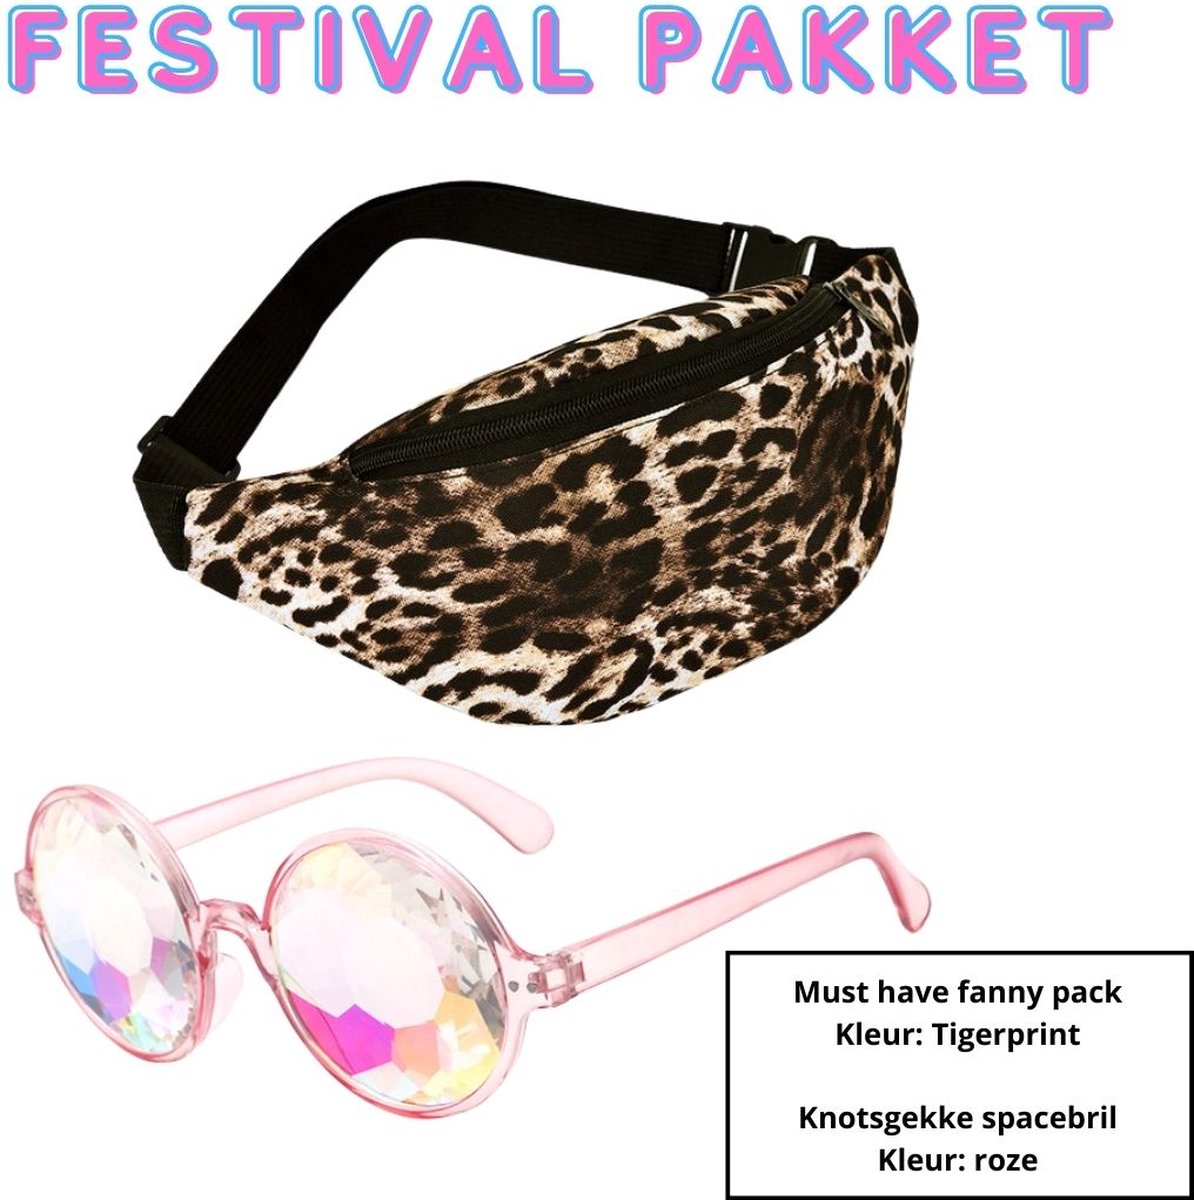 Heuptas / festival fanny pack (tijger) 30x14x8 - Festival bril/spacebril (roze)